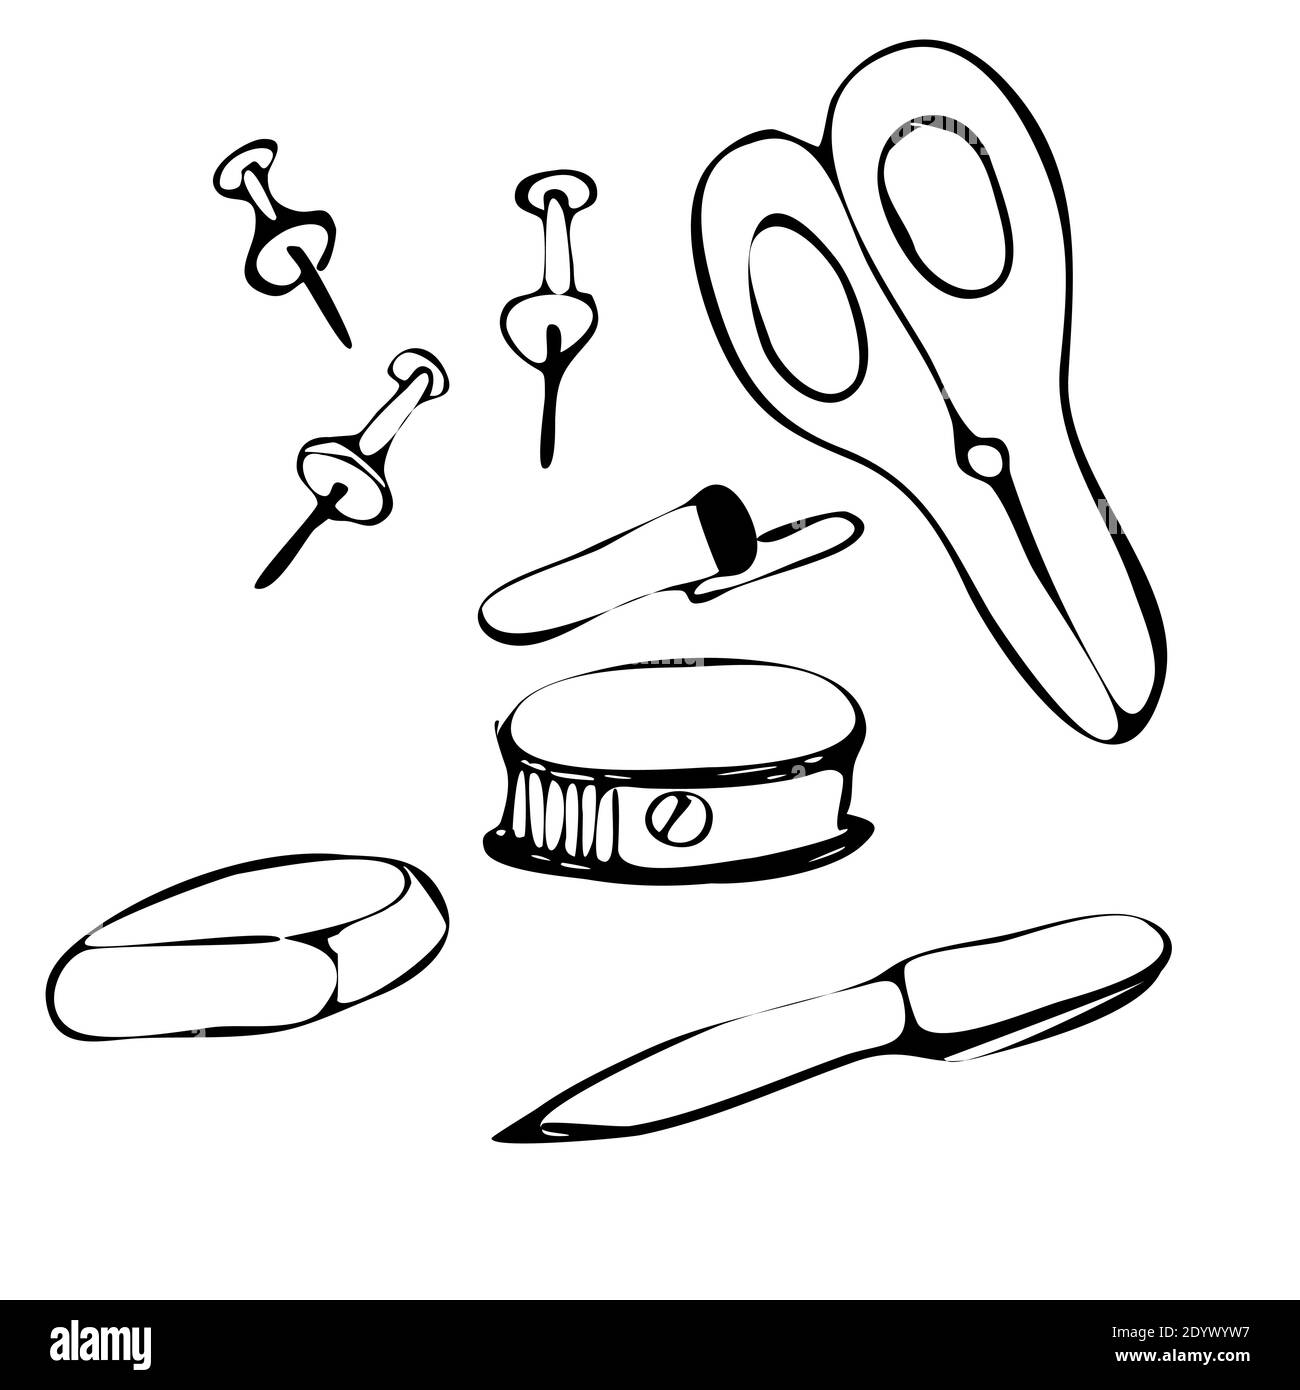 Stationery. Buttons, pen, scissor, gum, sharpener. Sketch. Style doodle. Vector illustration Stock Vector